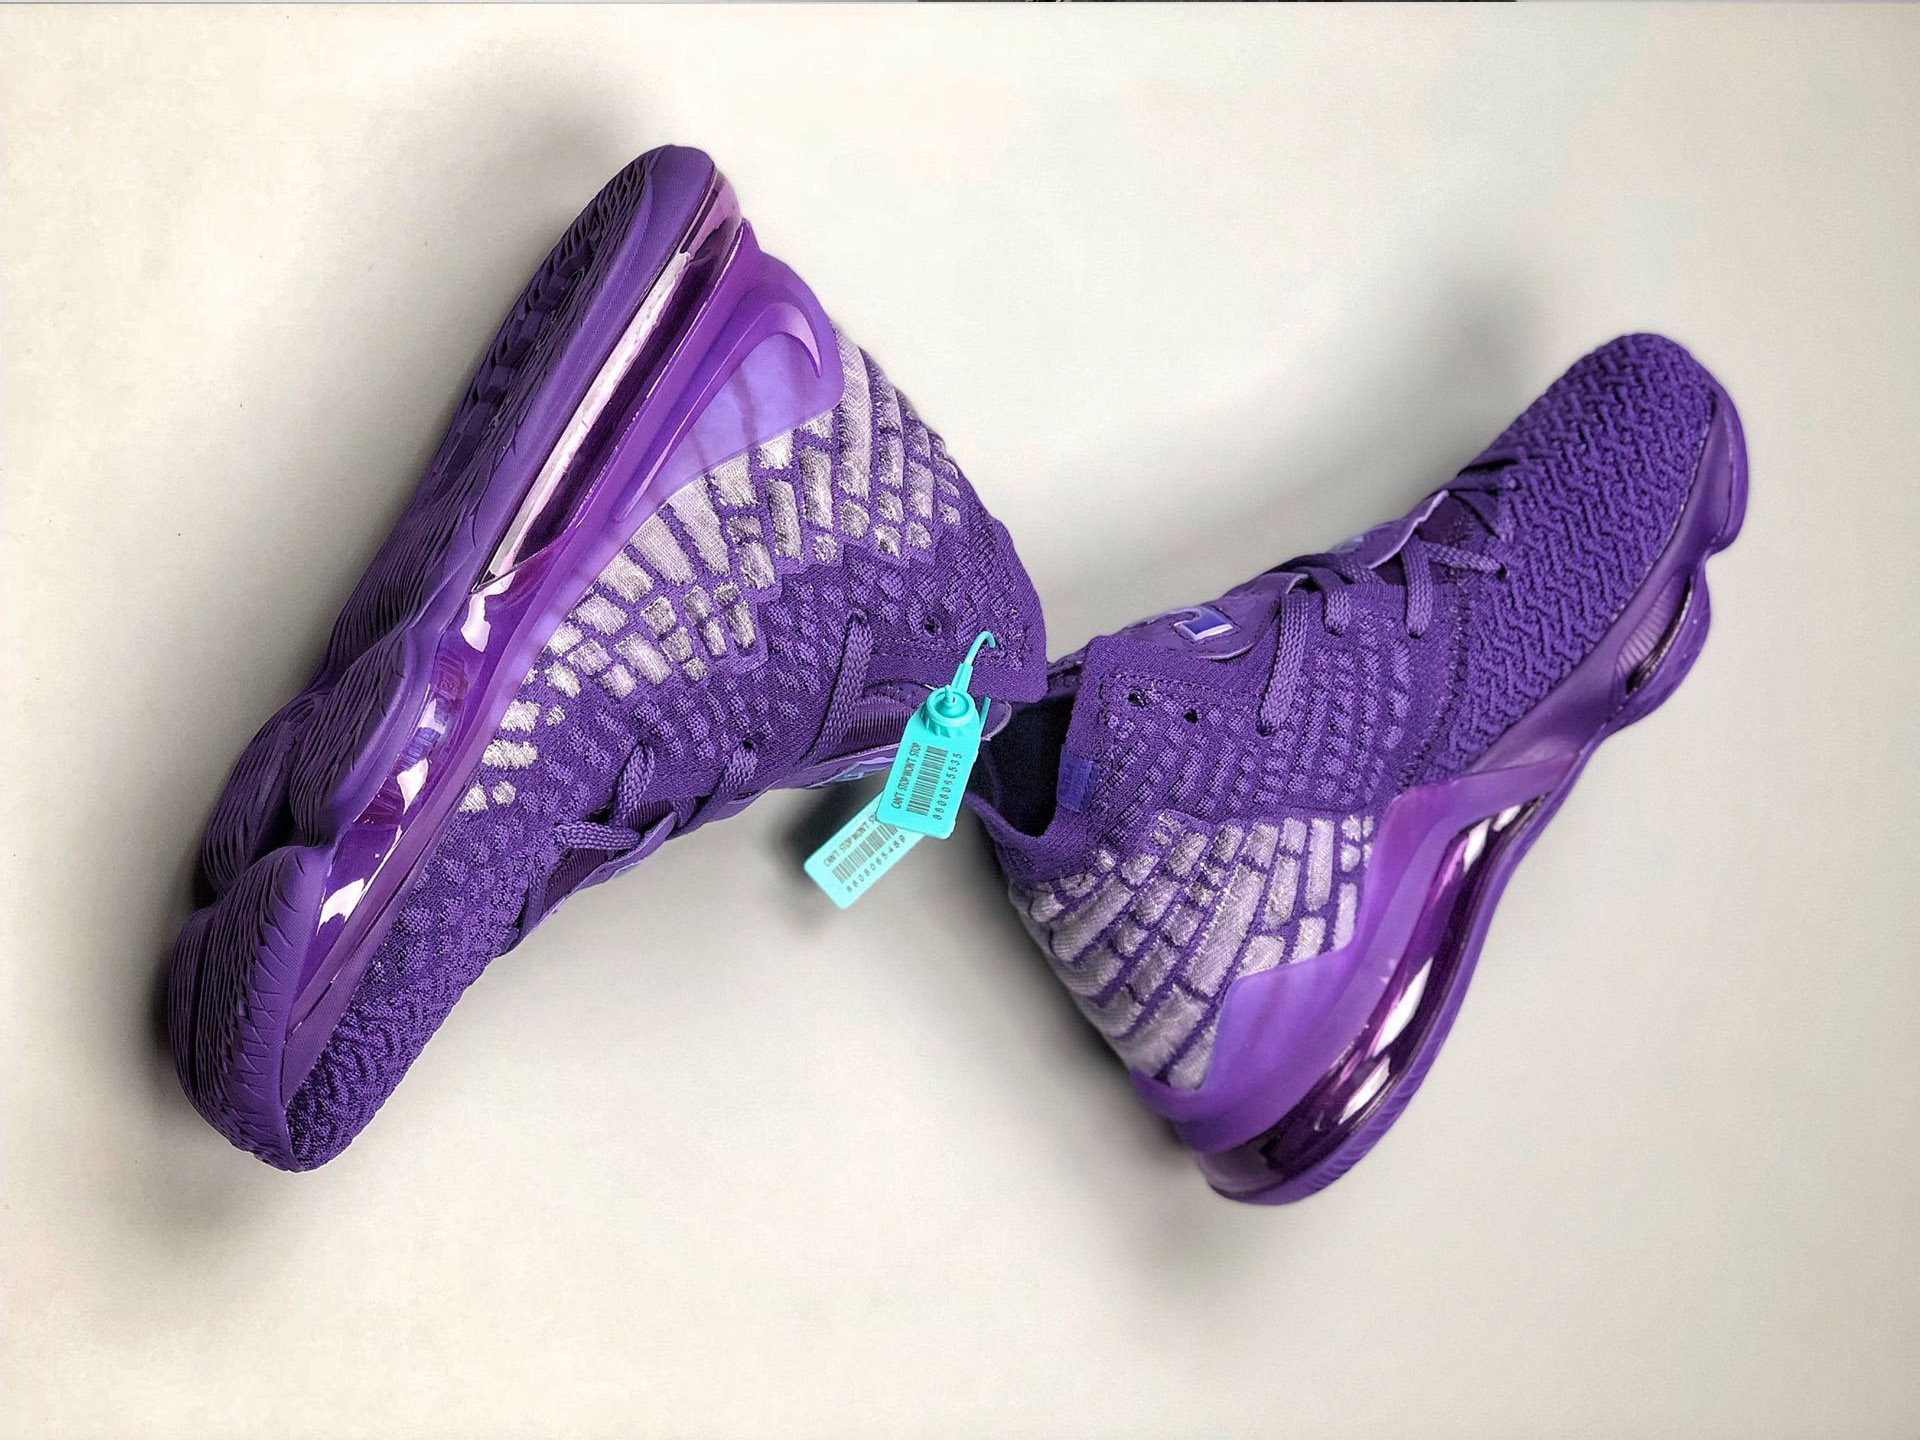 nike lebron purple shoes